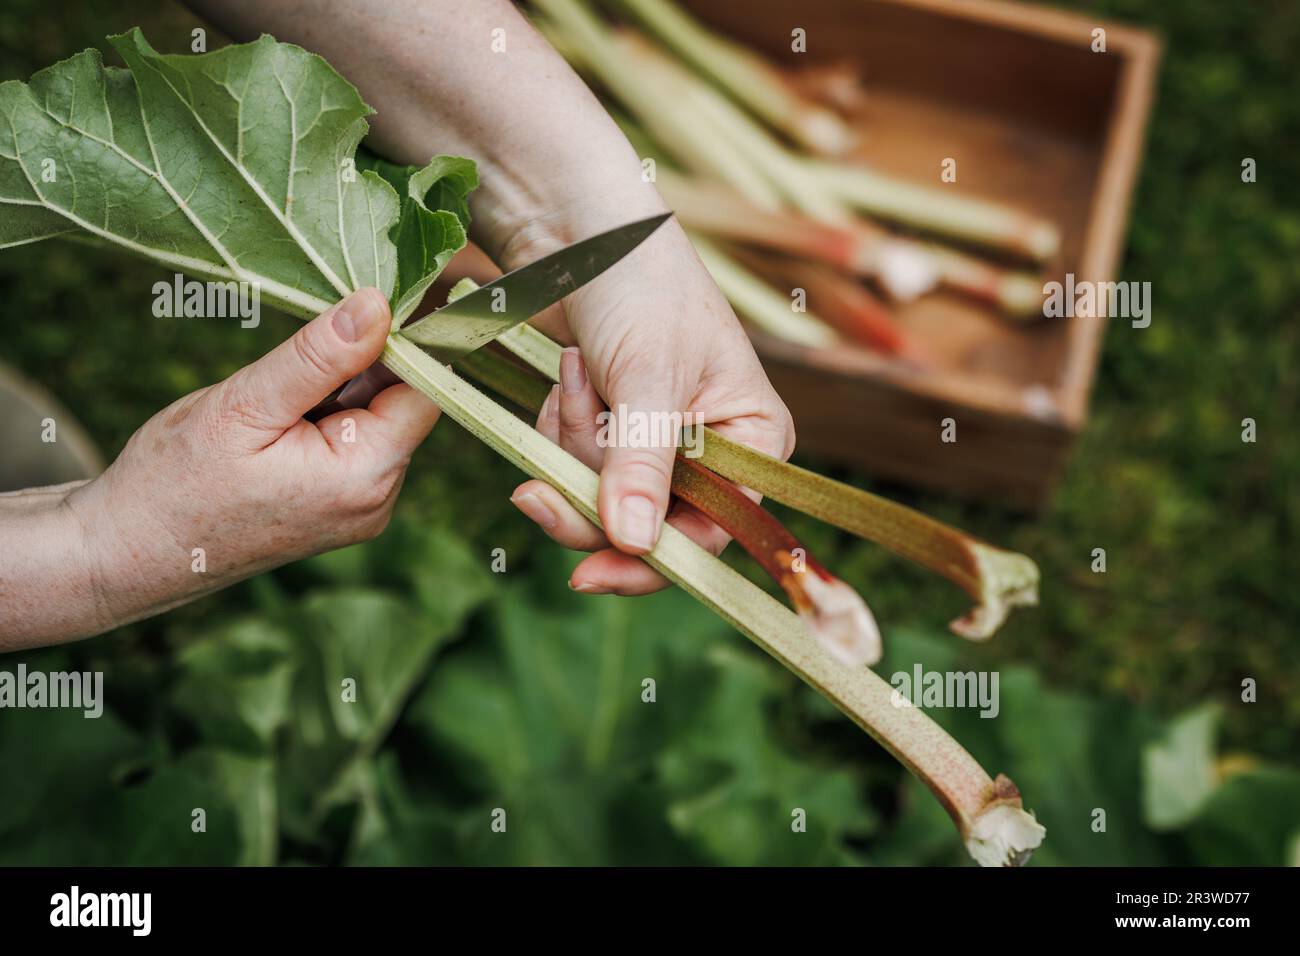 Rhubarb harvest in organic garden. Farmers hand cutting rhubarb stalk with knife Stock Photo